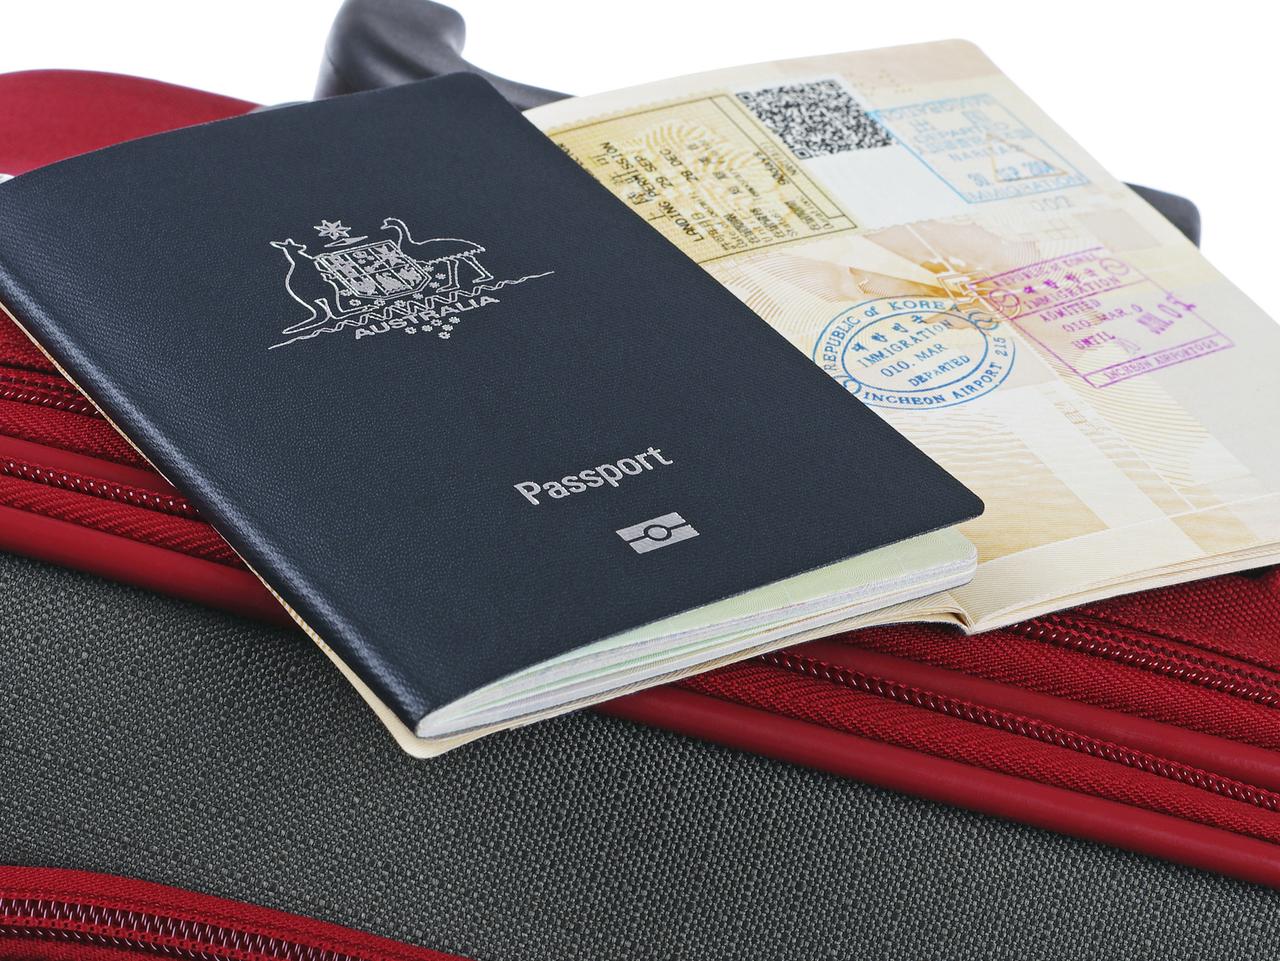 travel australian passport